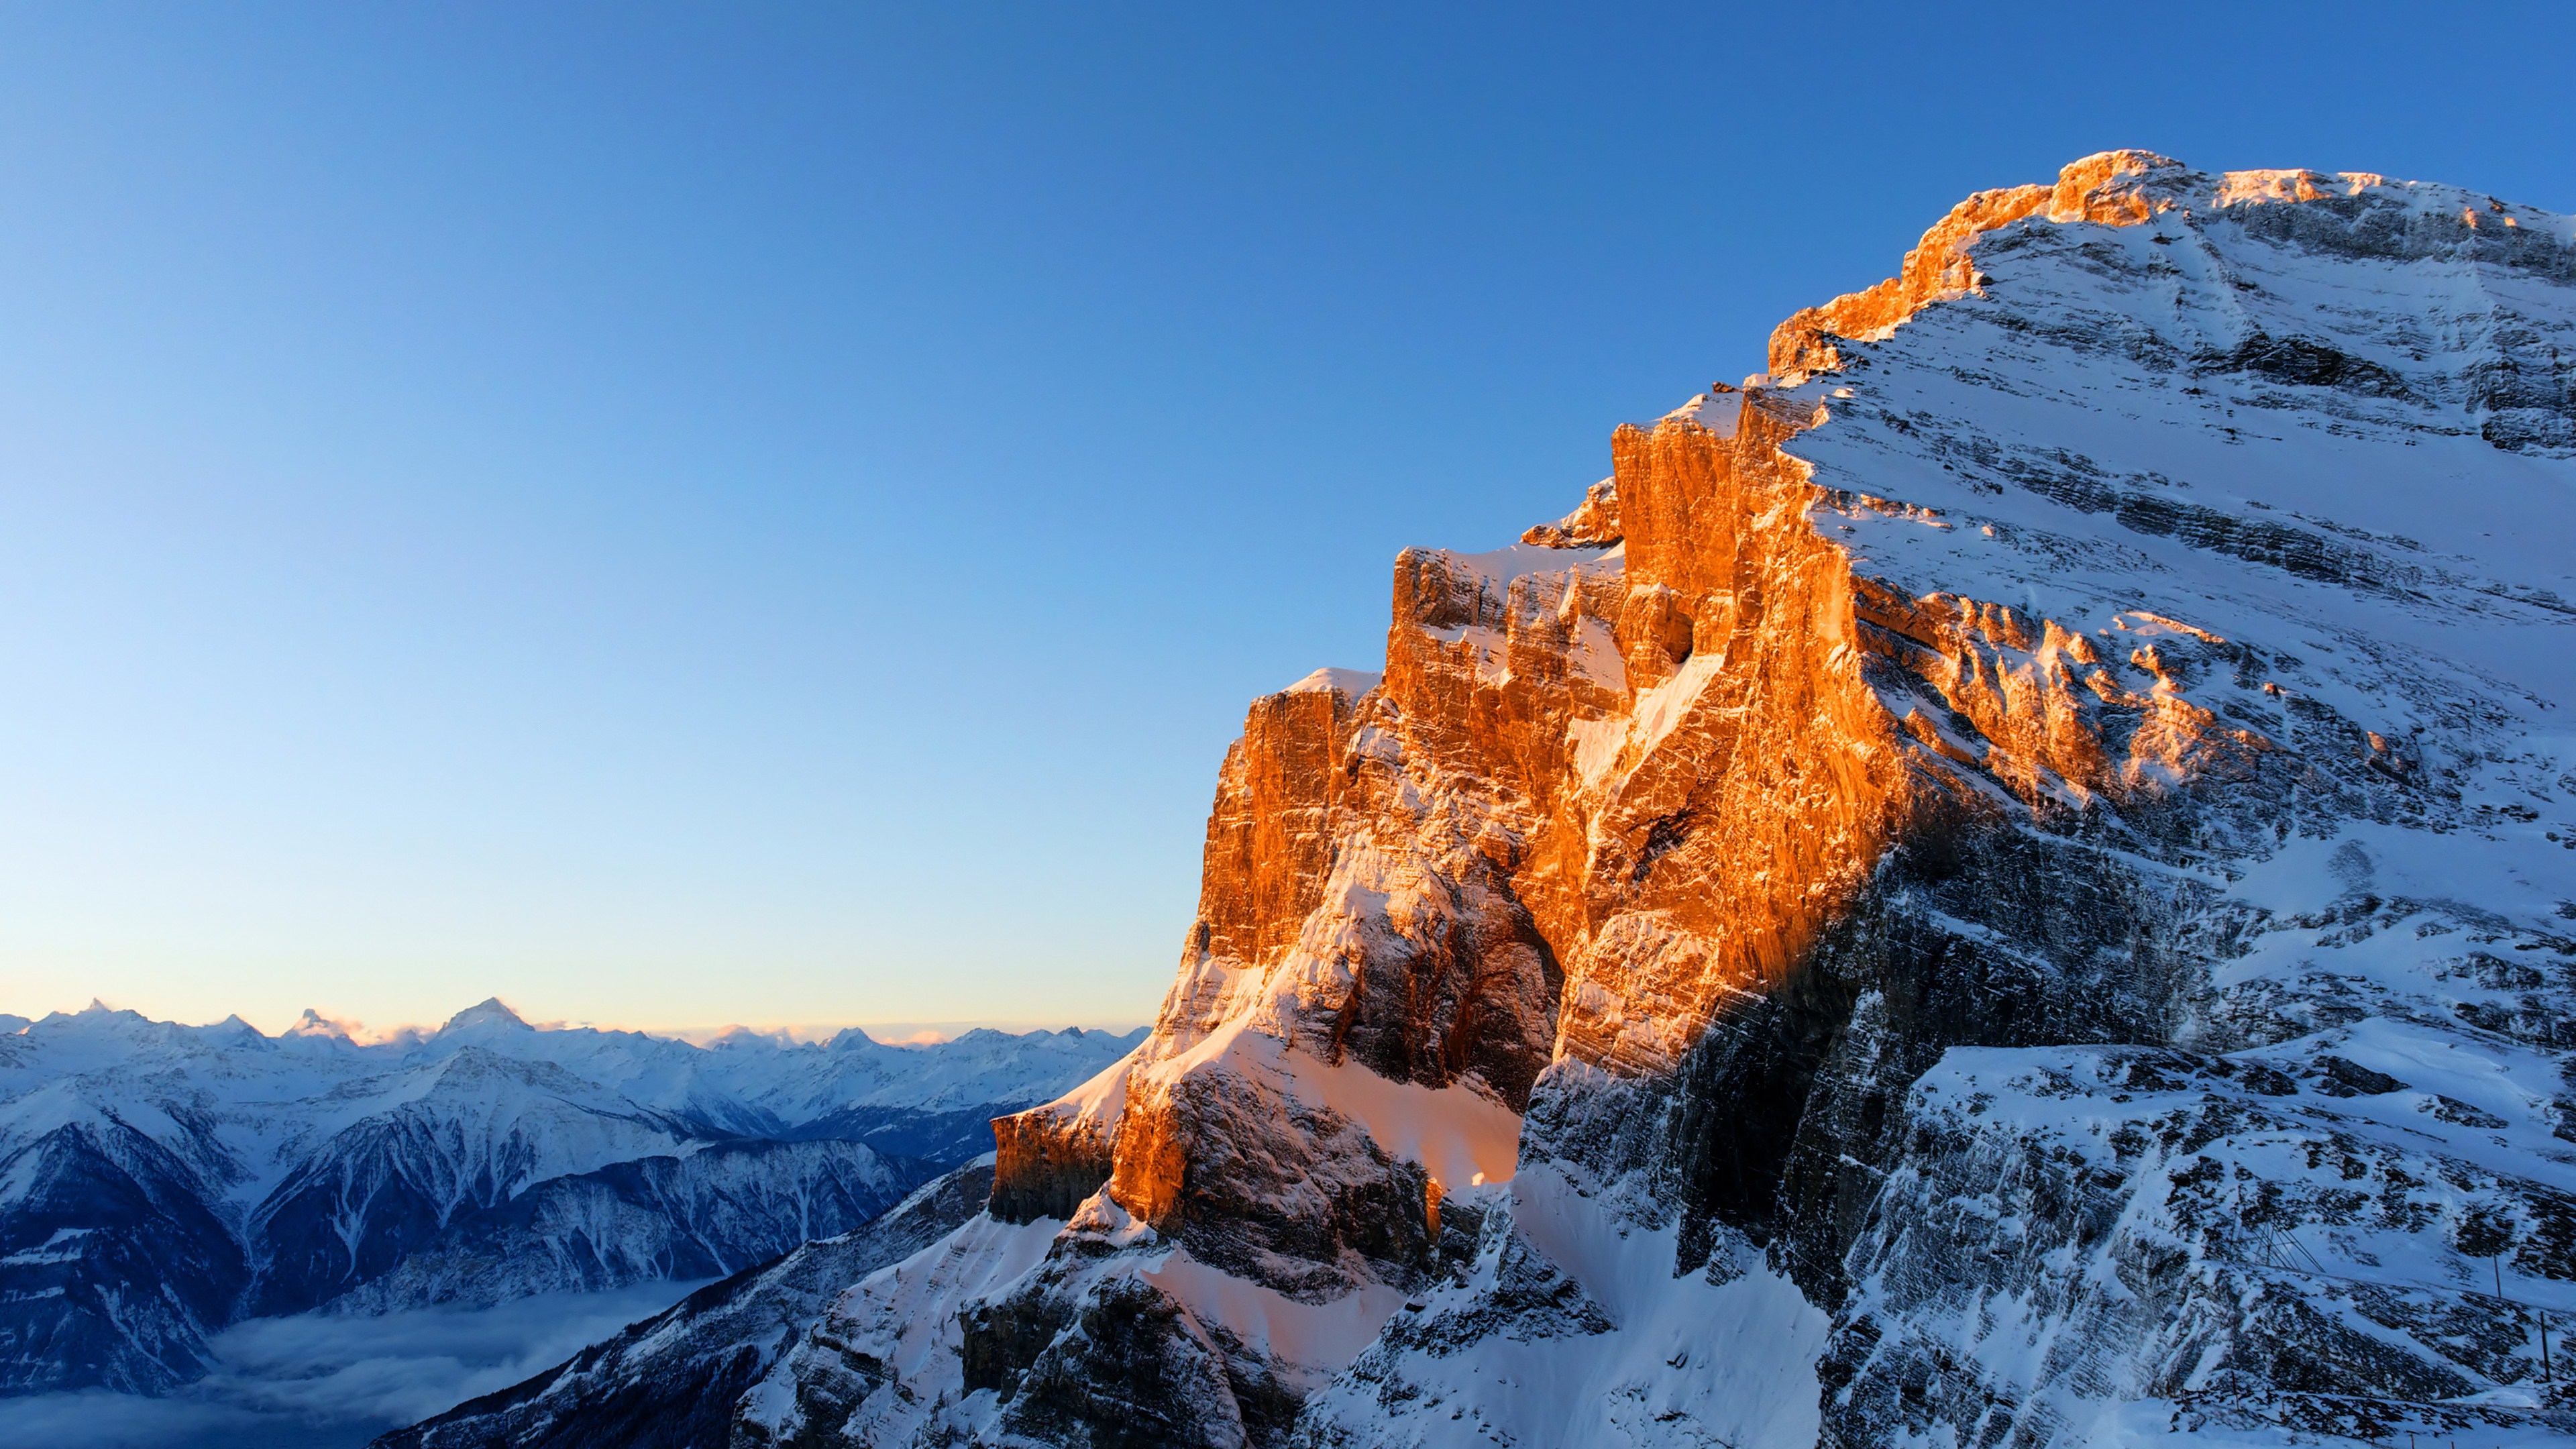 Mountain 4k Ultra HD Wallpaper | Background Image | 3840x2160